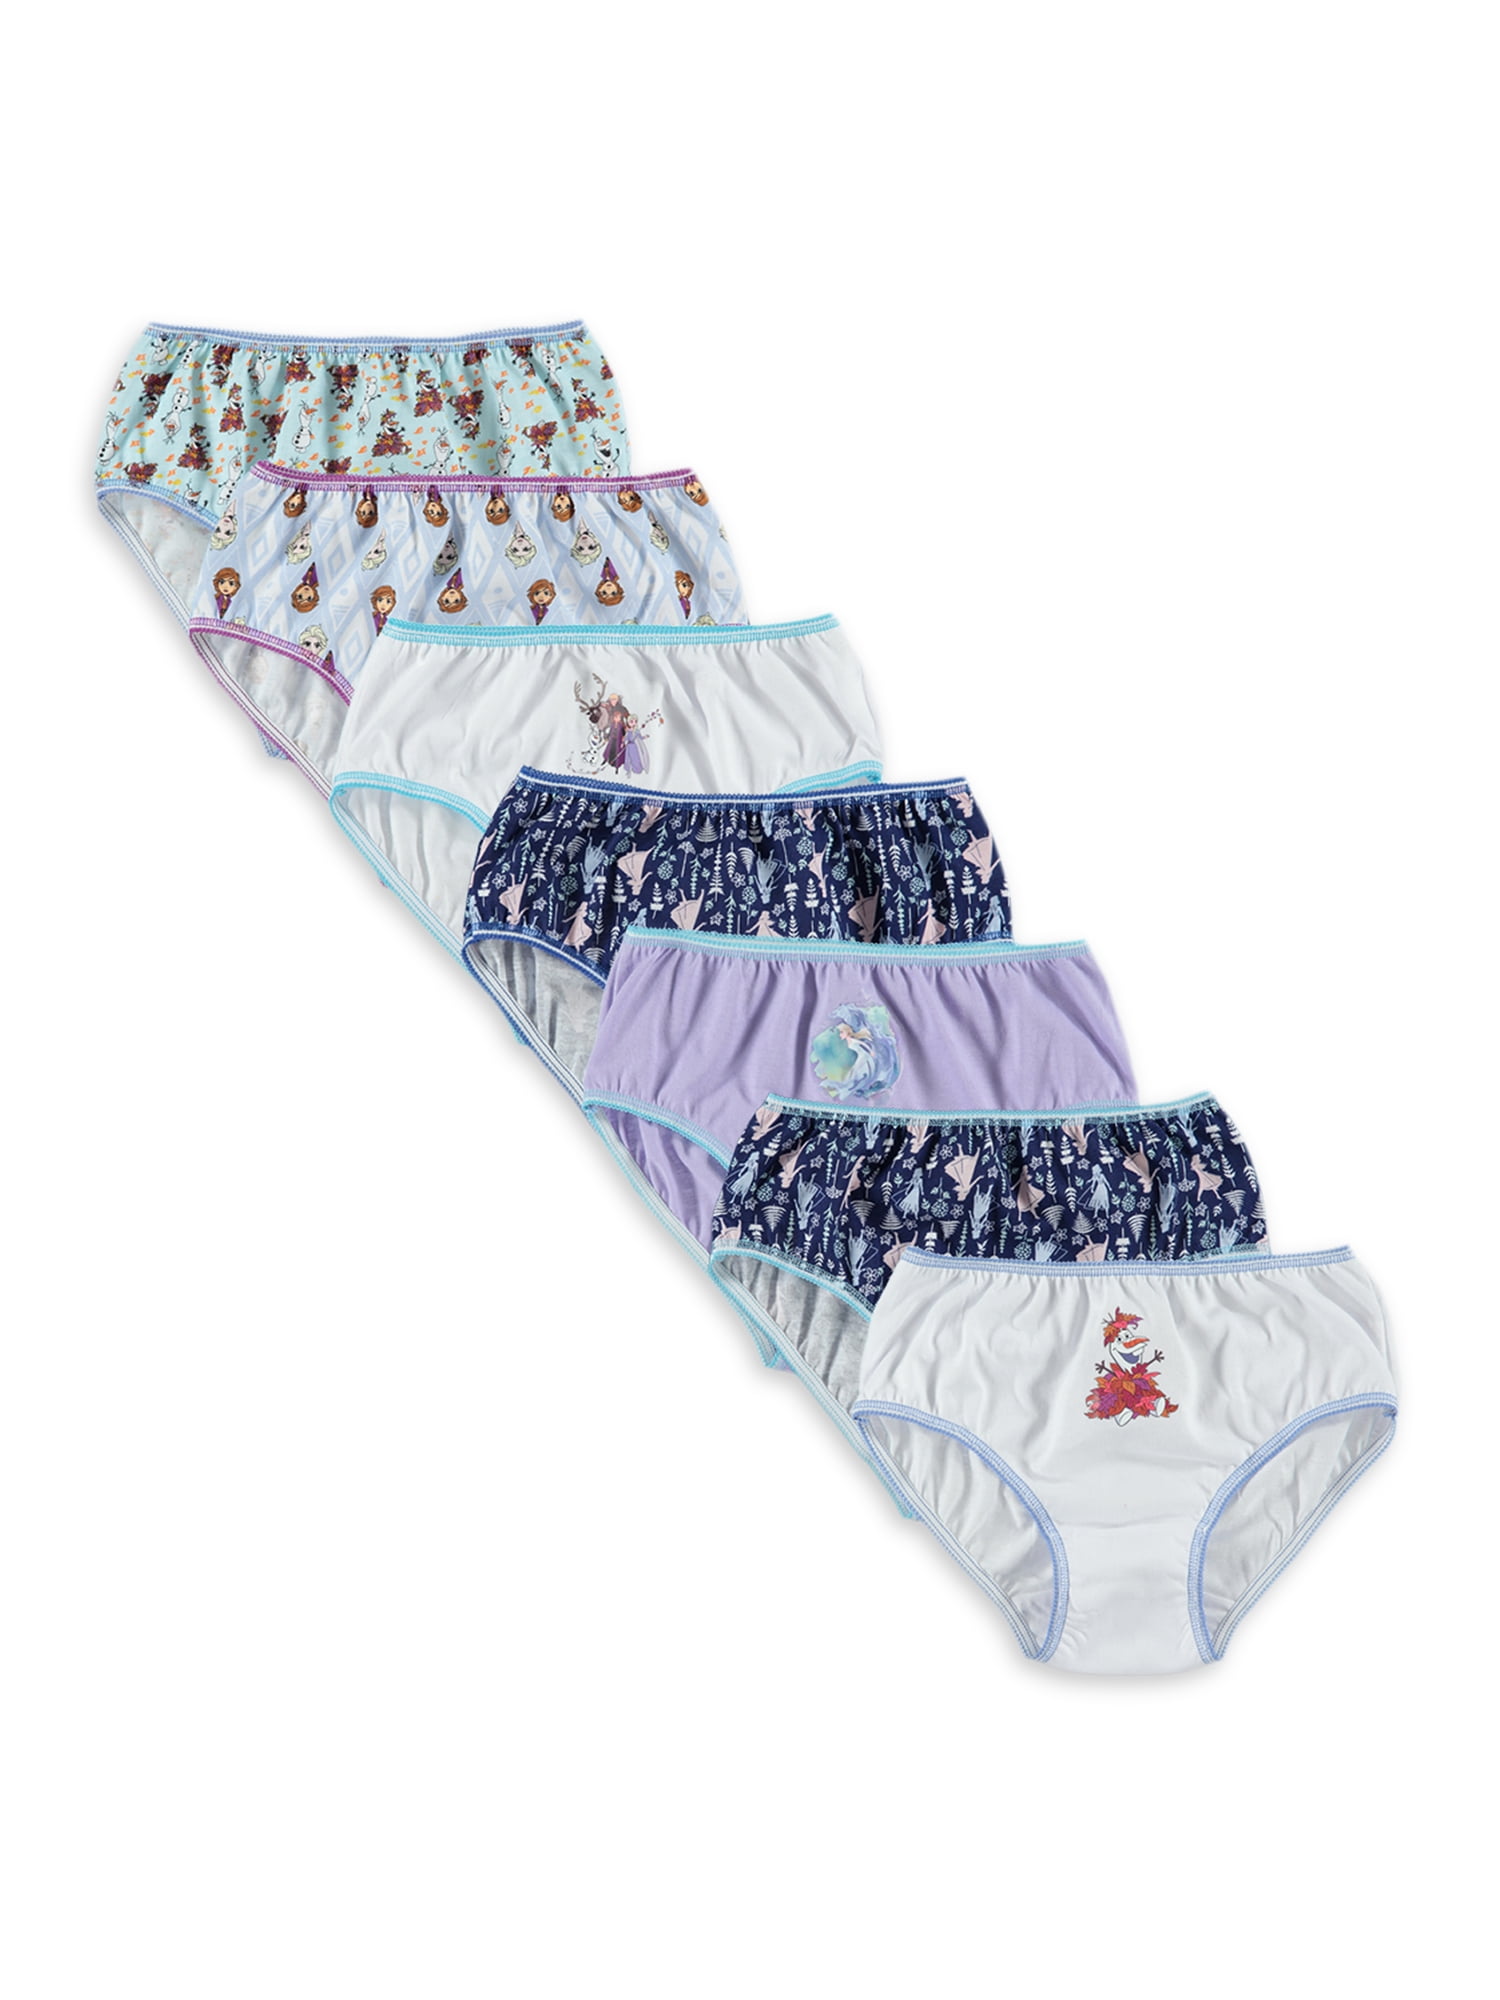 Disney FROZEN 7 pairs Girls PANTIES Underwear 100% Cotton Size 2T